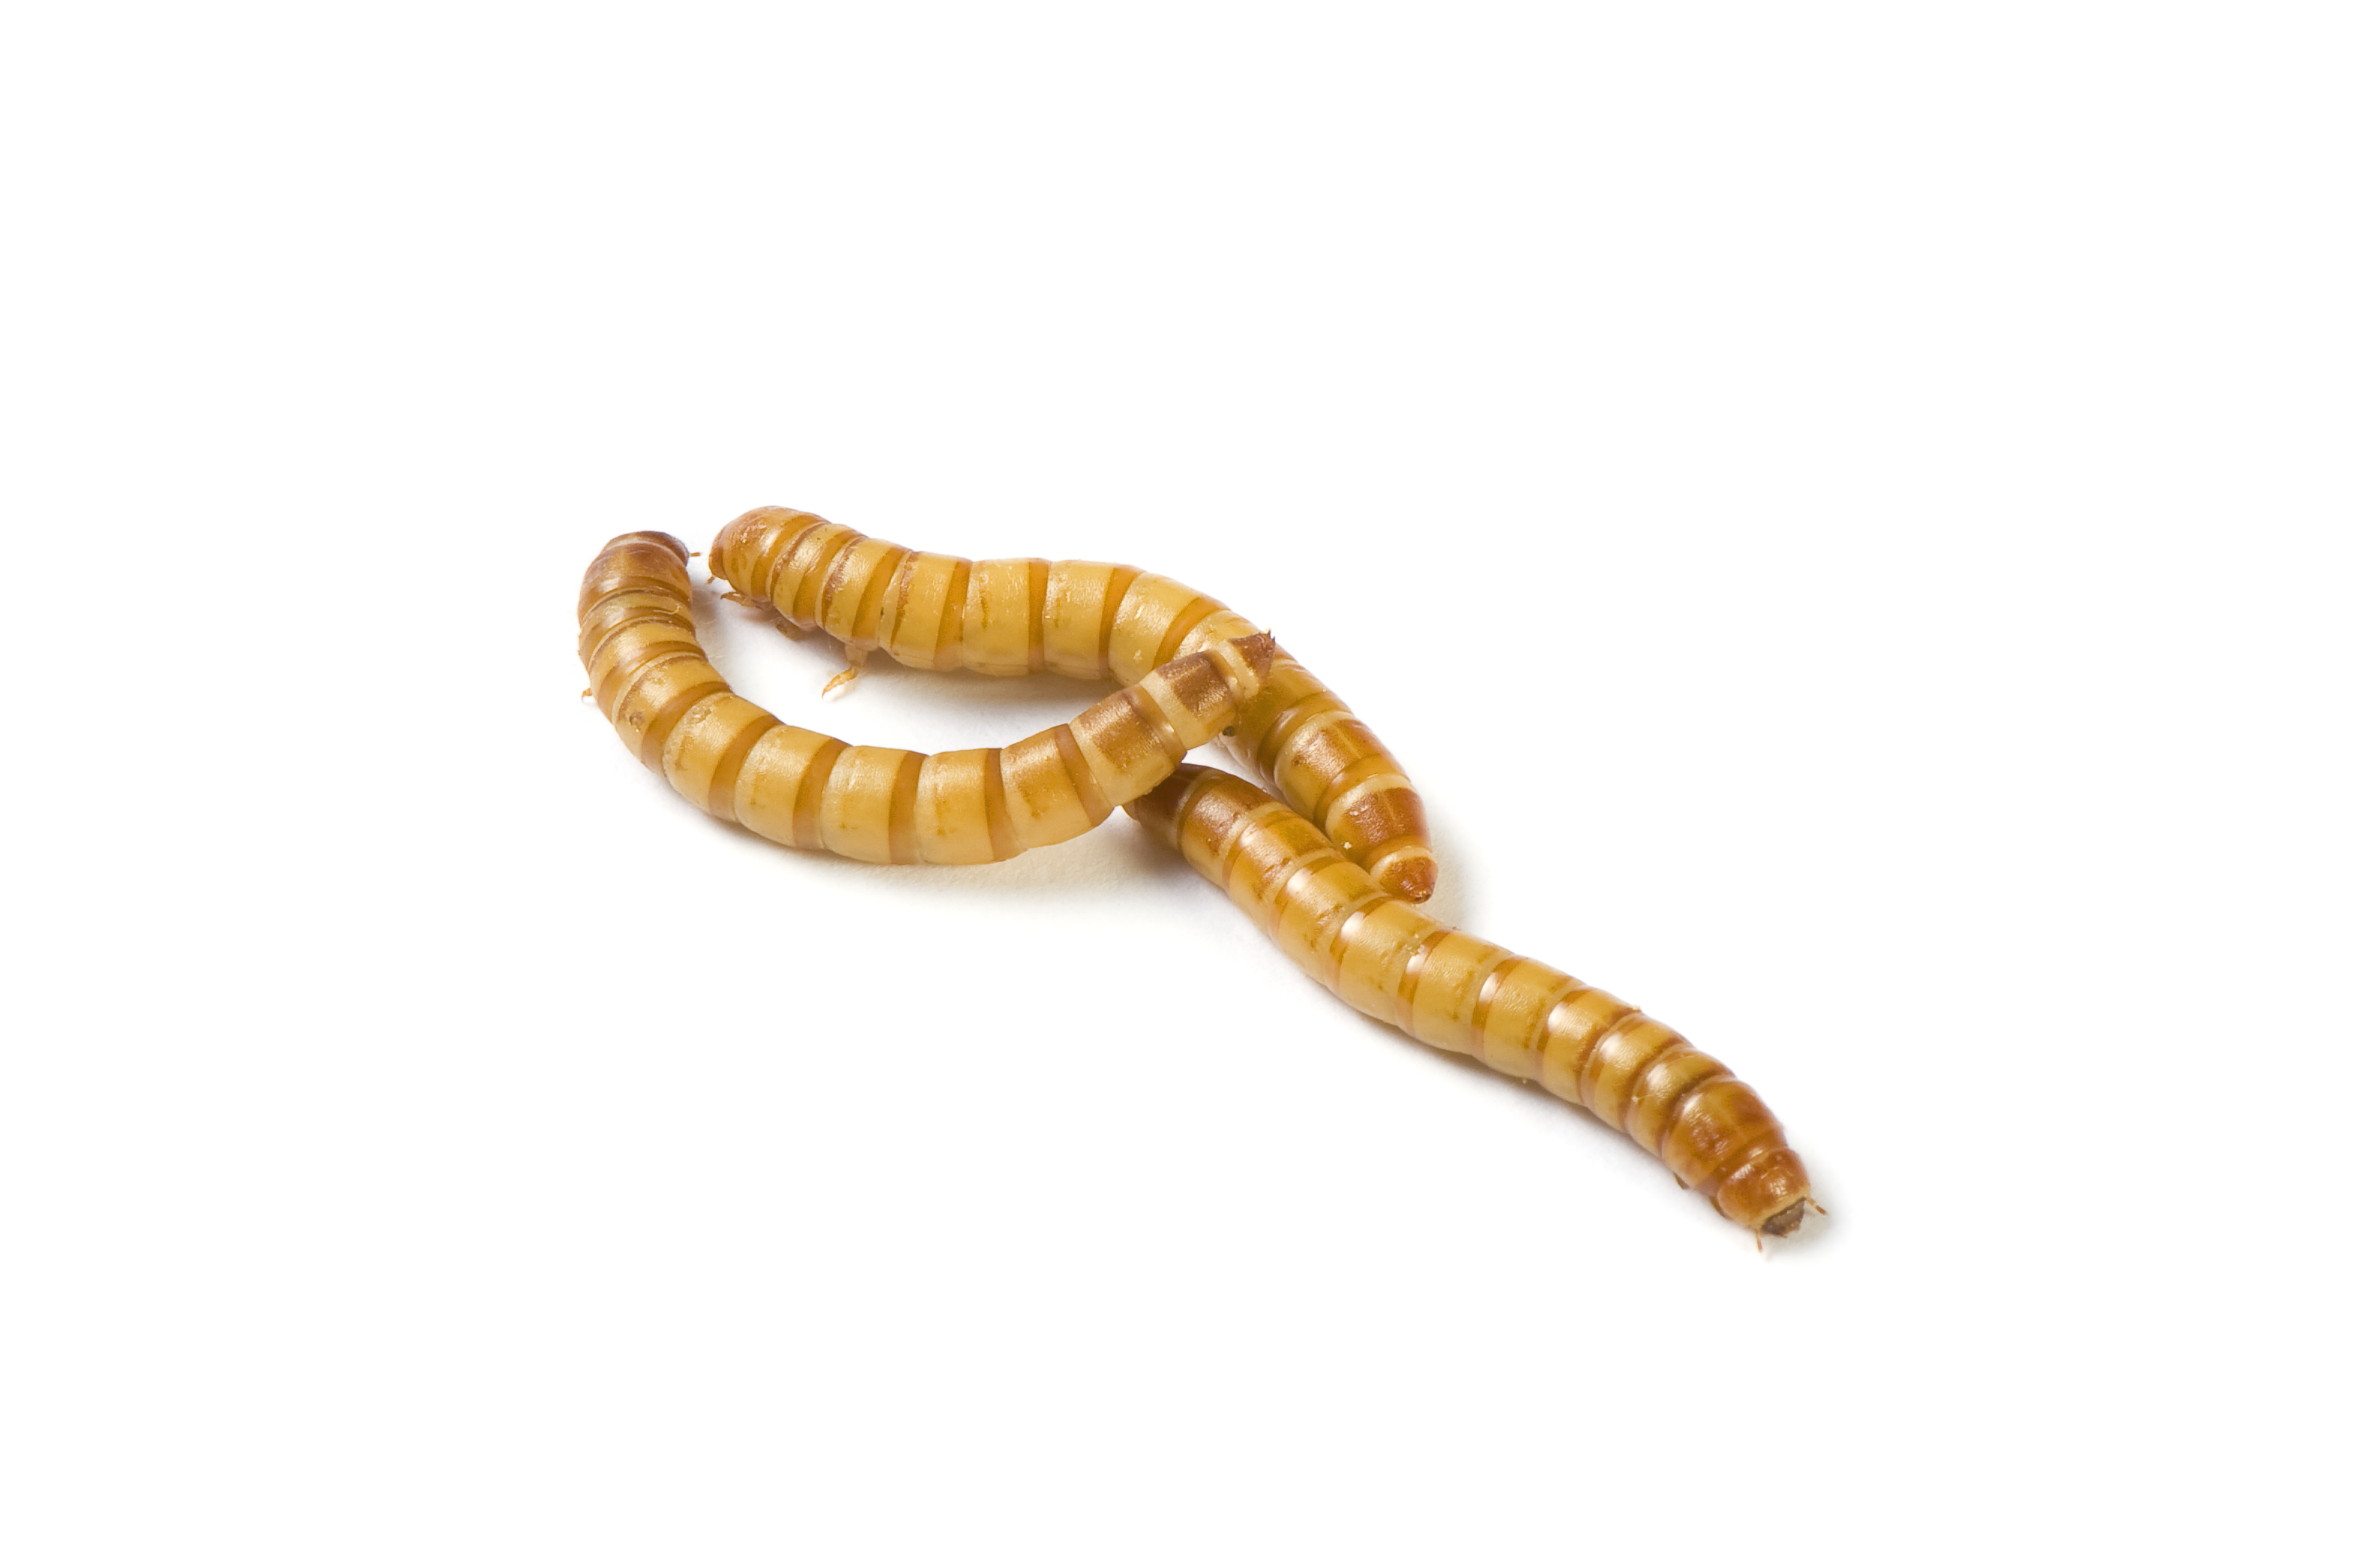 Worm Bags - Rainbow Mealworms